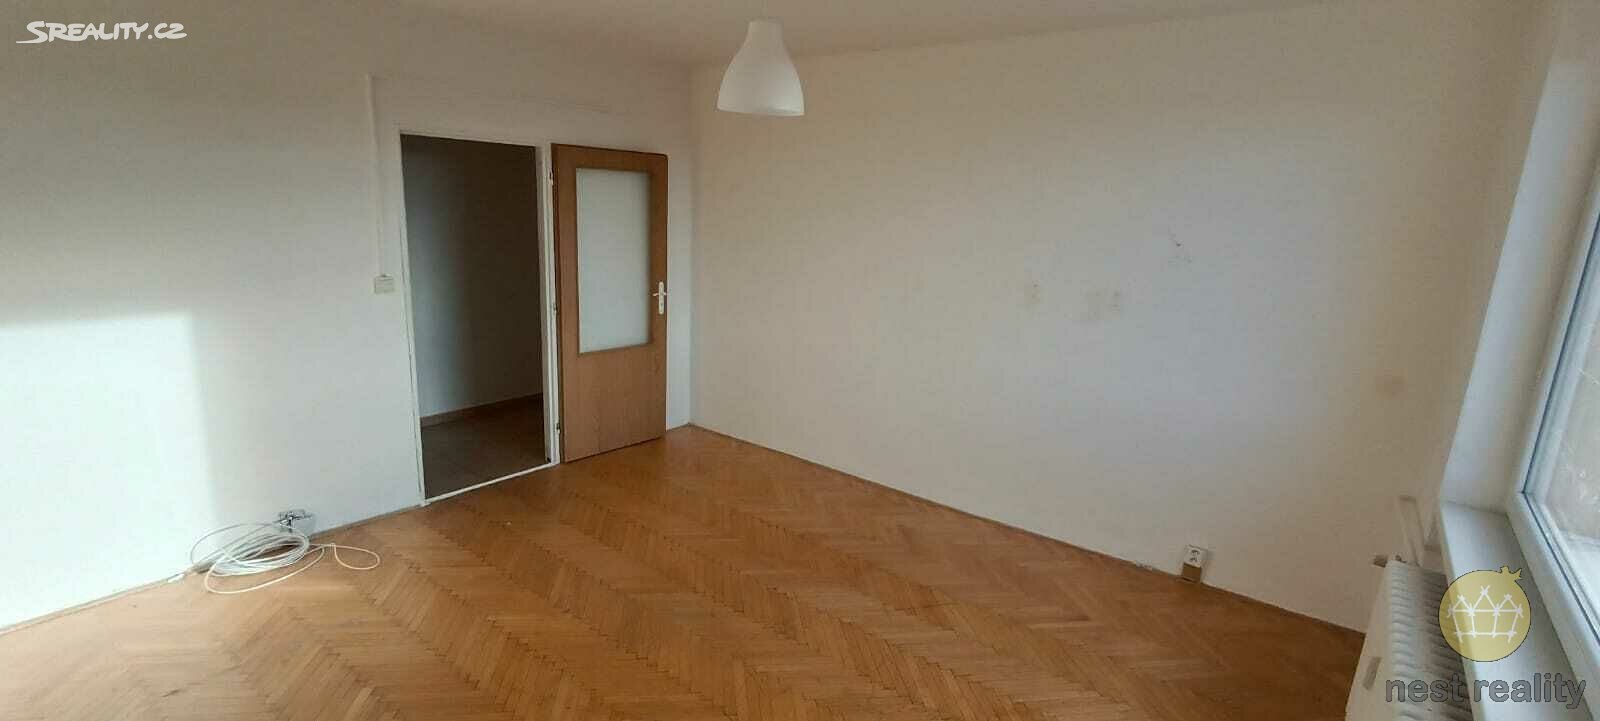 Prodej bytu 1+1 39 m², Chvatěrubská, Praha 8 - Čimice